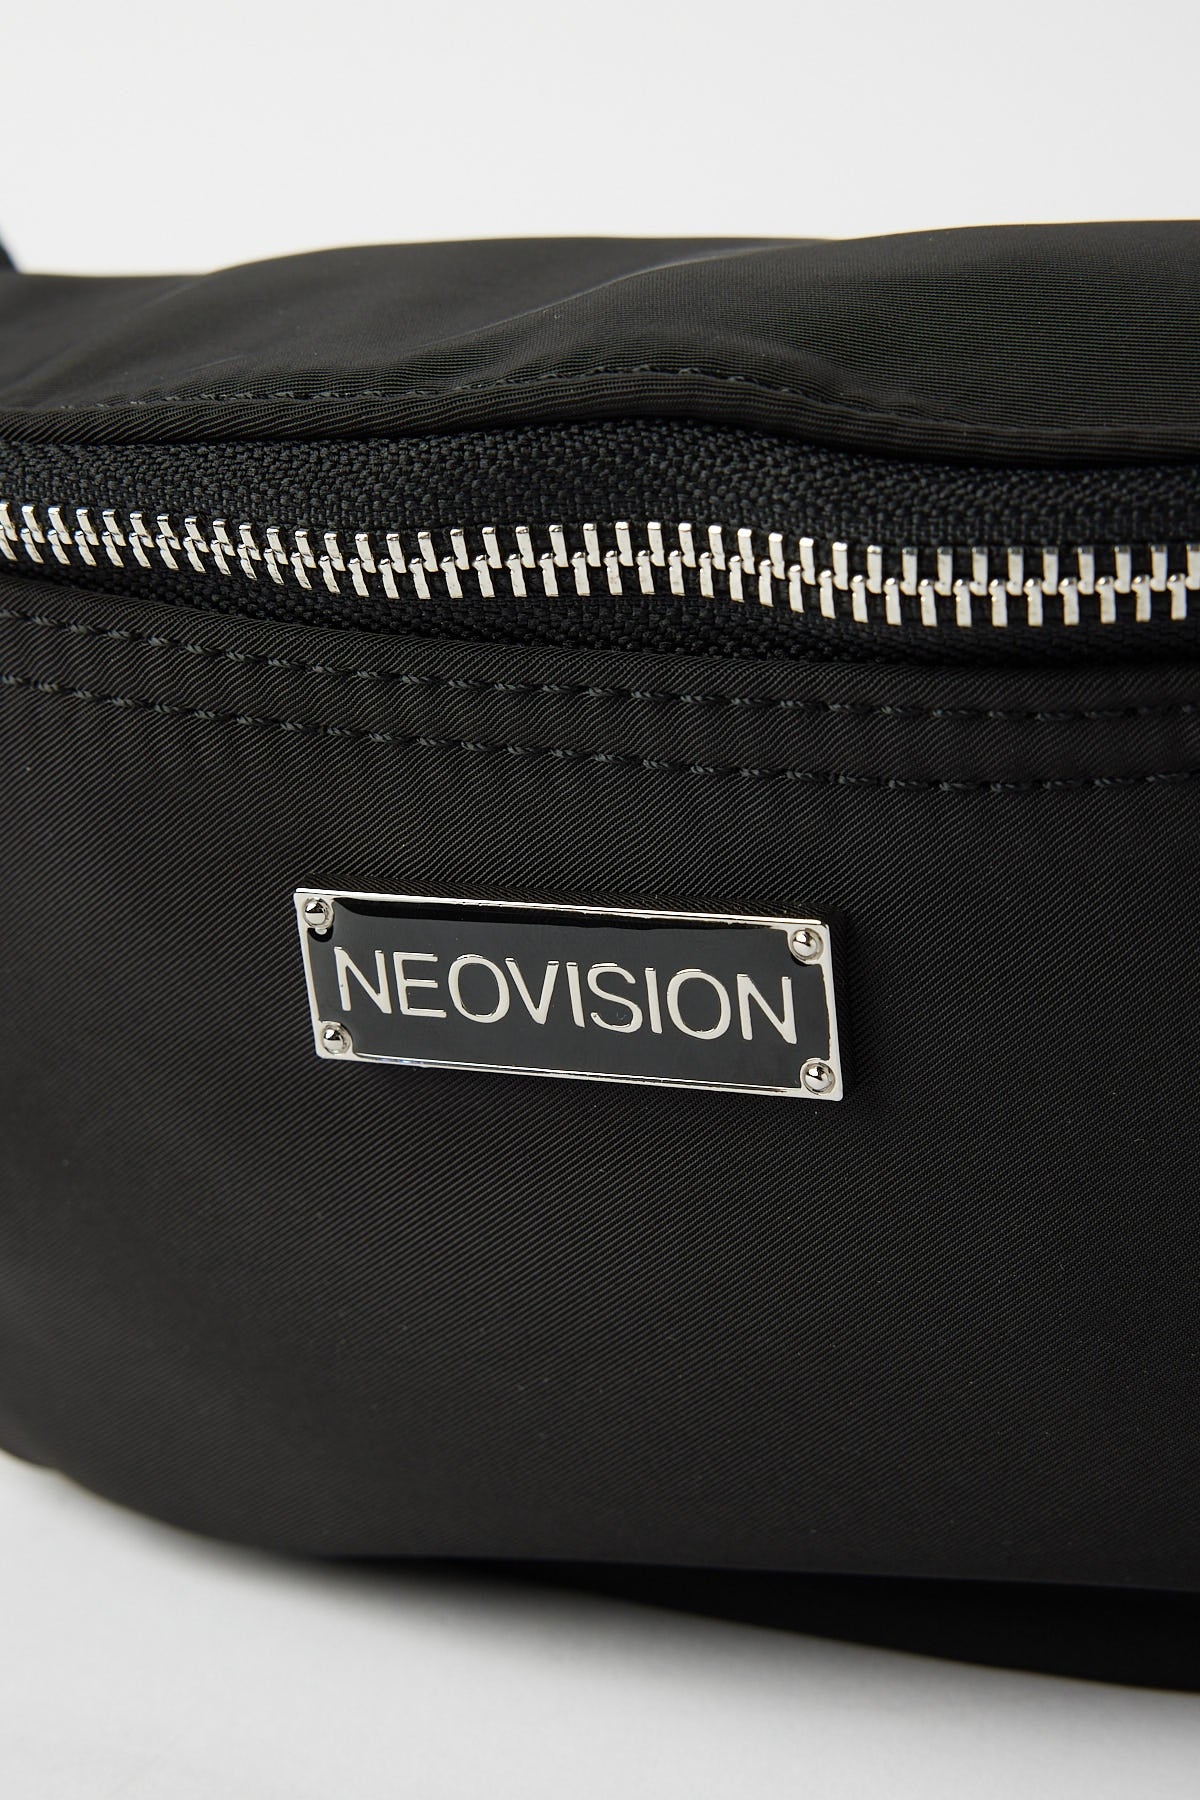 Neovision Survival Nylon Bumbag Black